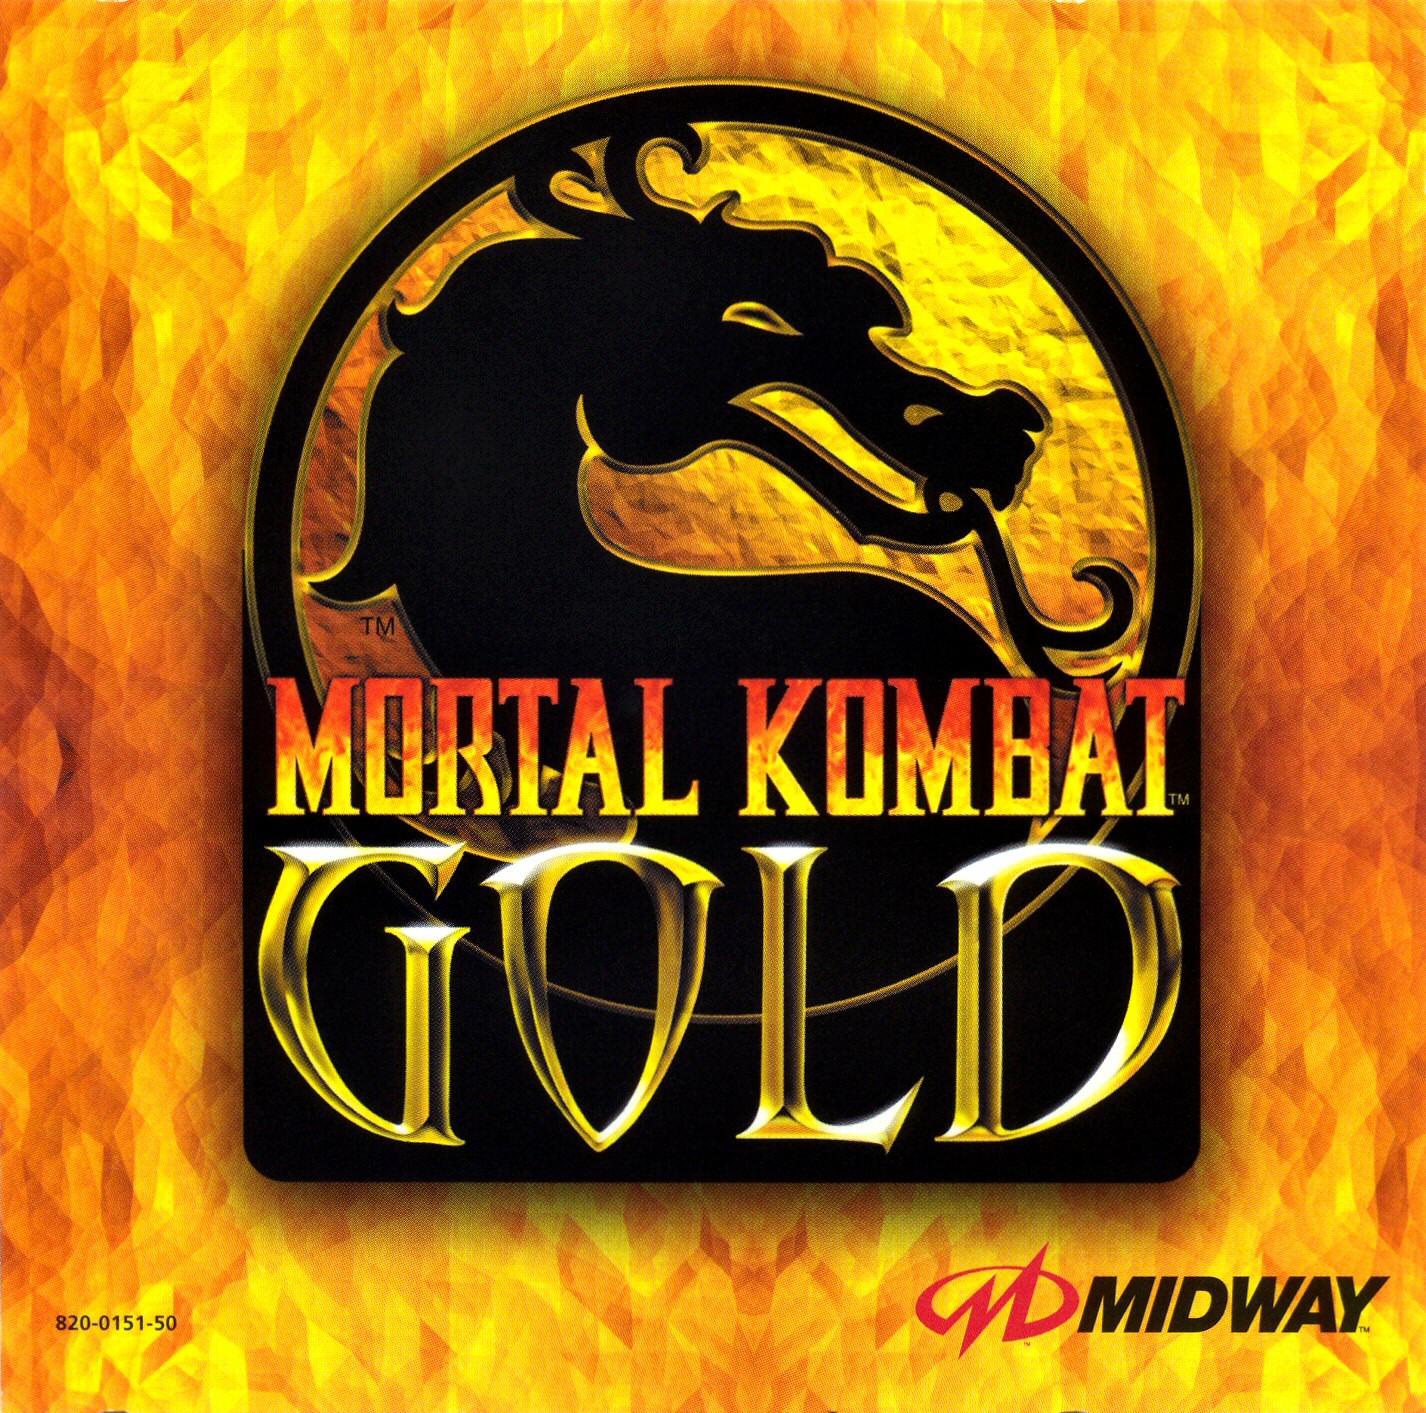 Mortal Kombat: Gold